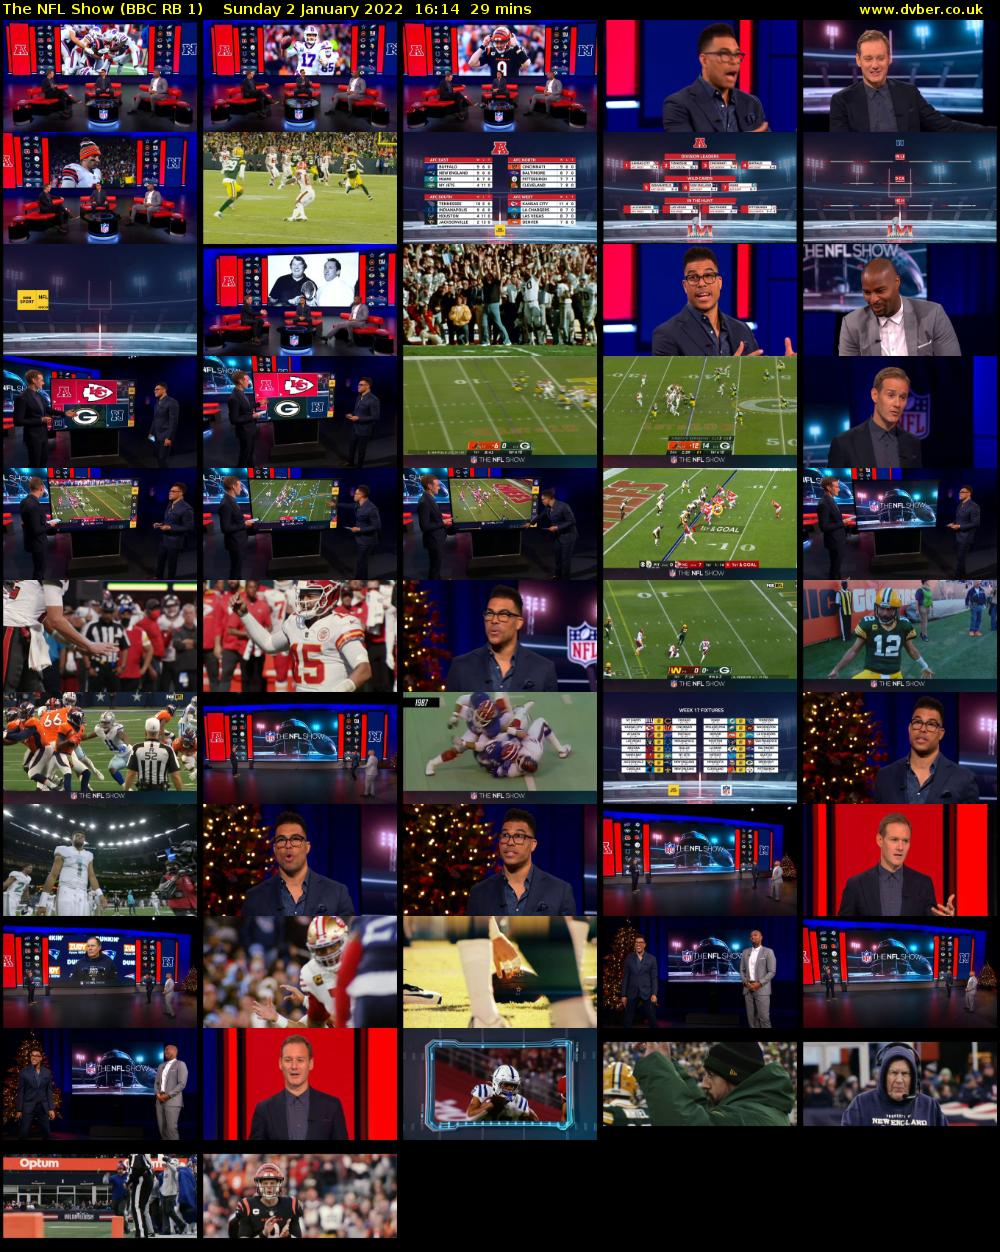 The NFL Show (BBC RB 1) Sunday 2 January 2022 16:14 - 16:43